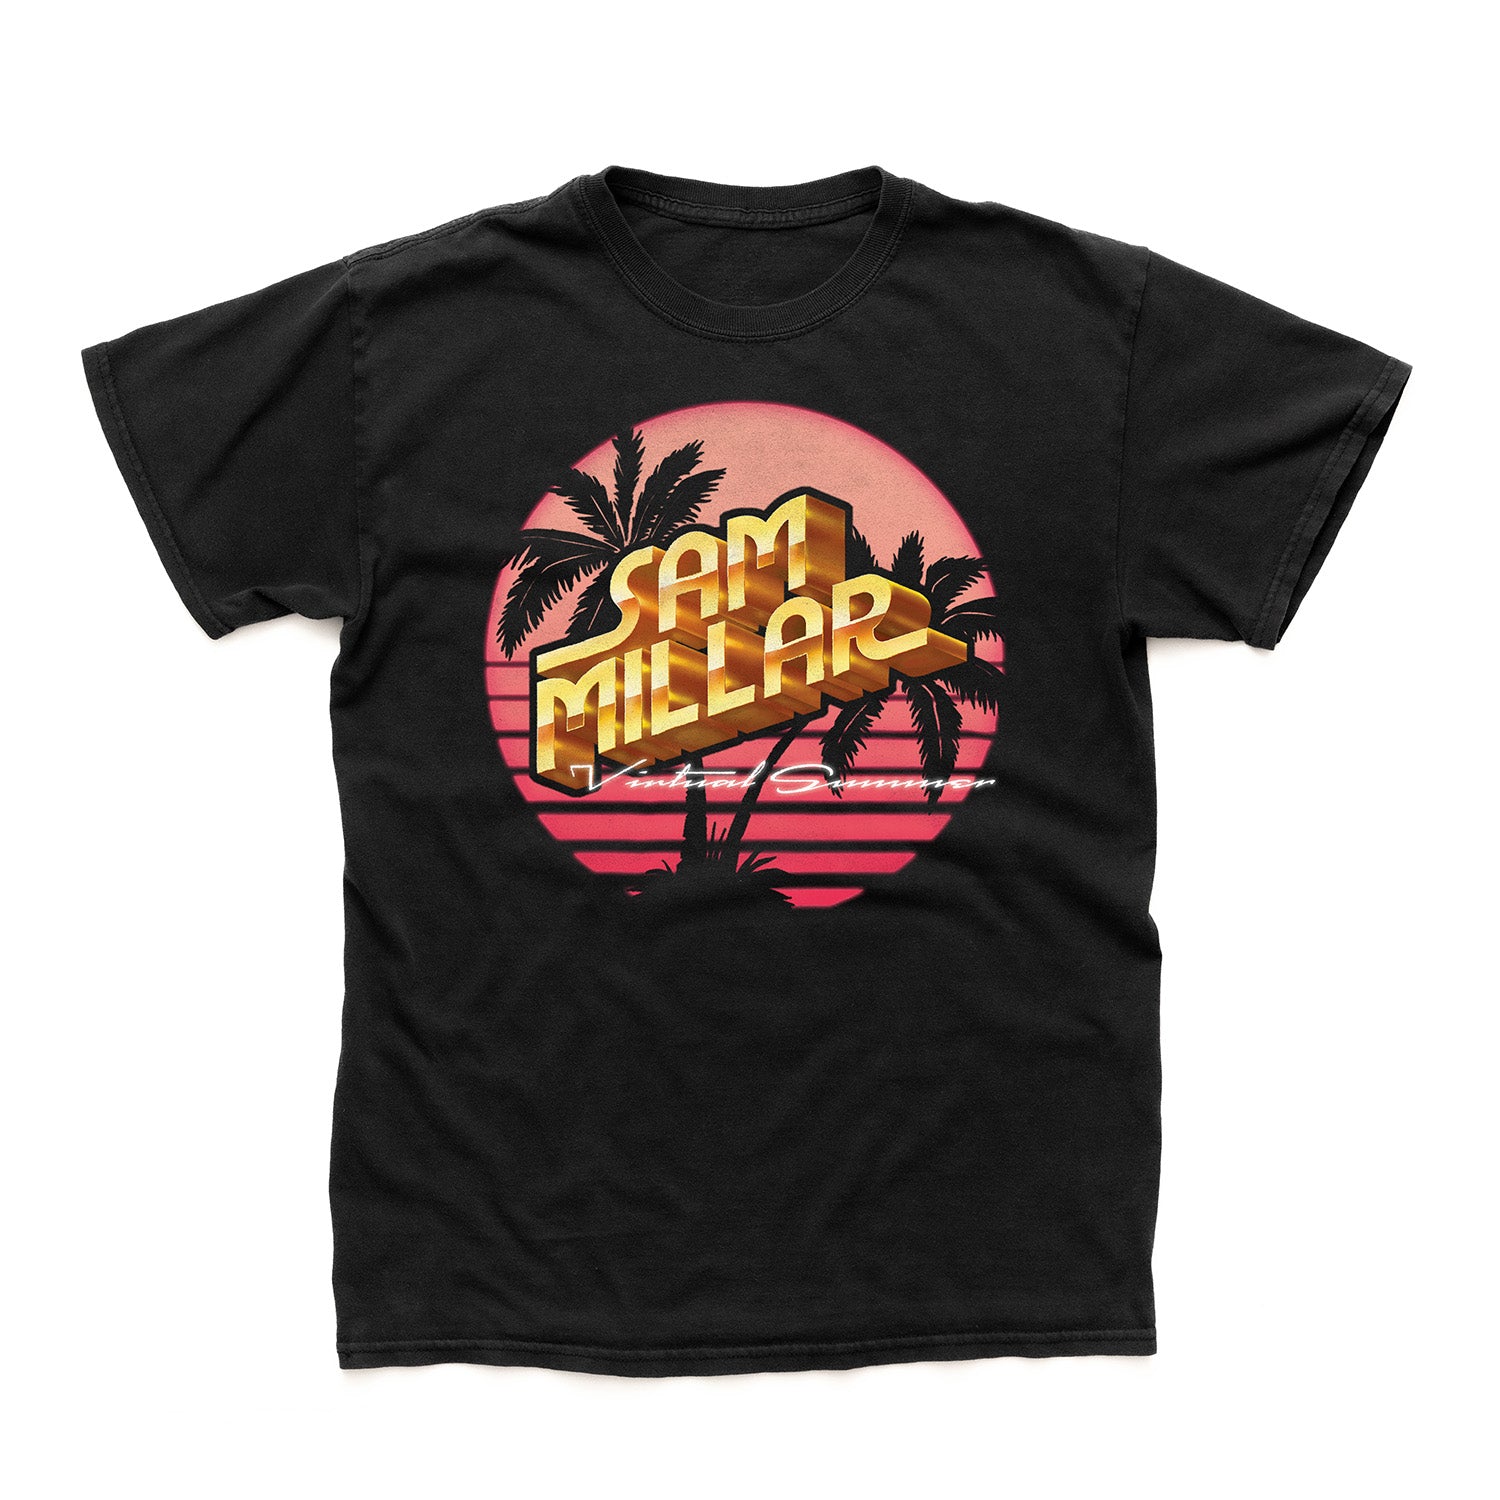 Sam Millar "Virtual Summer" Black T shirt - PRE-ORDER